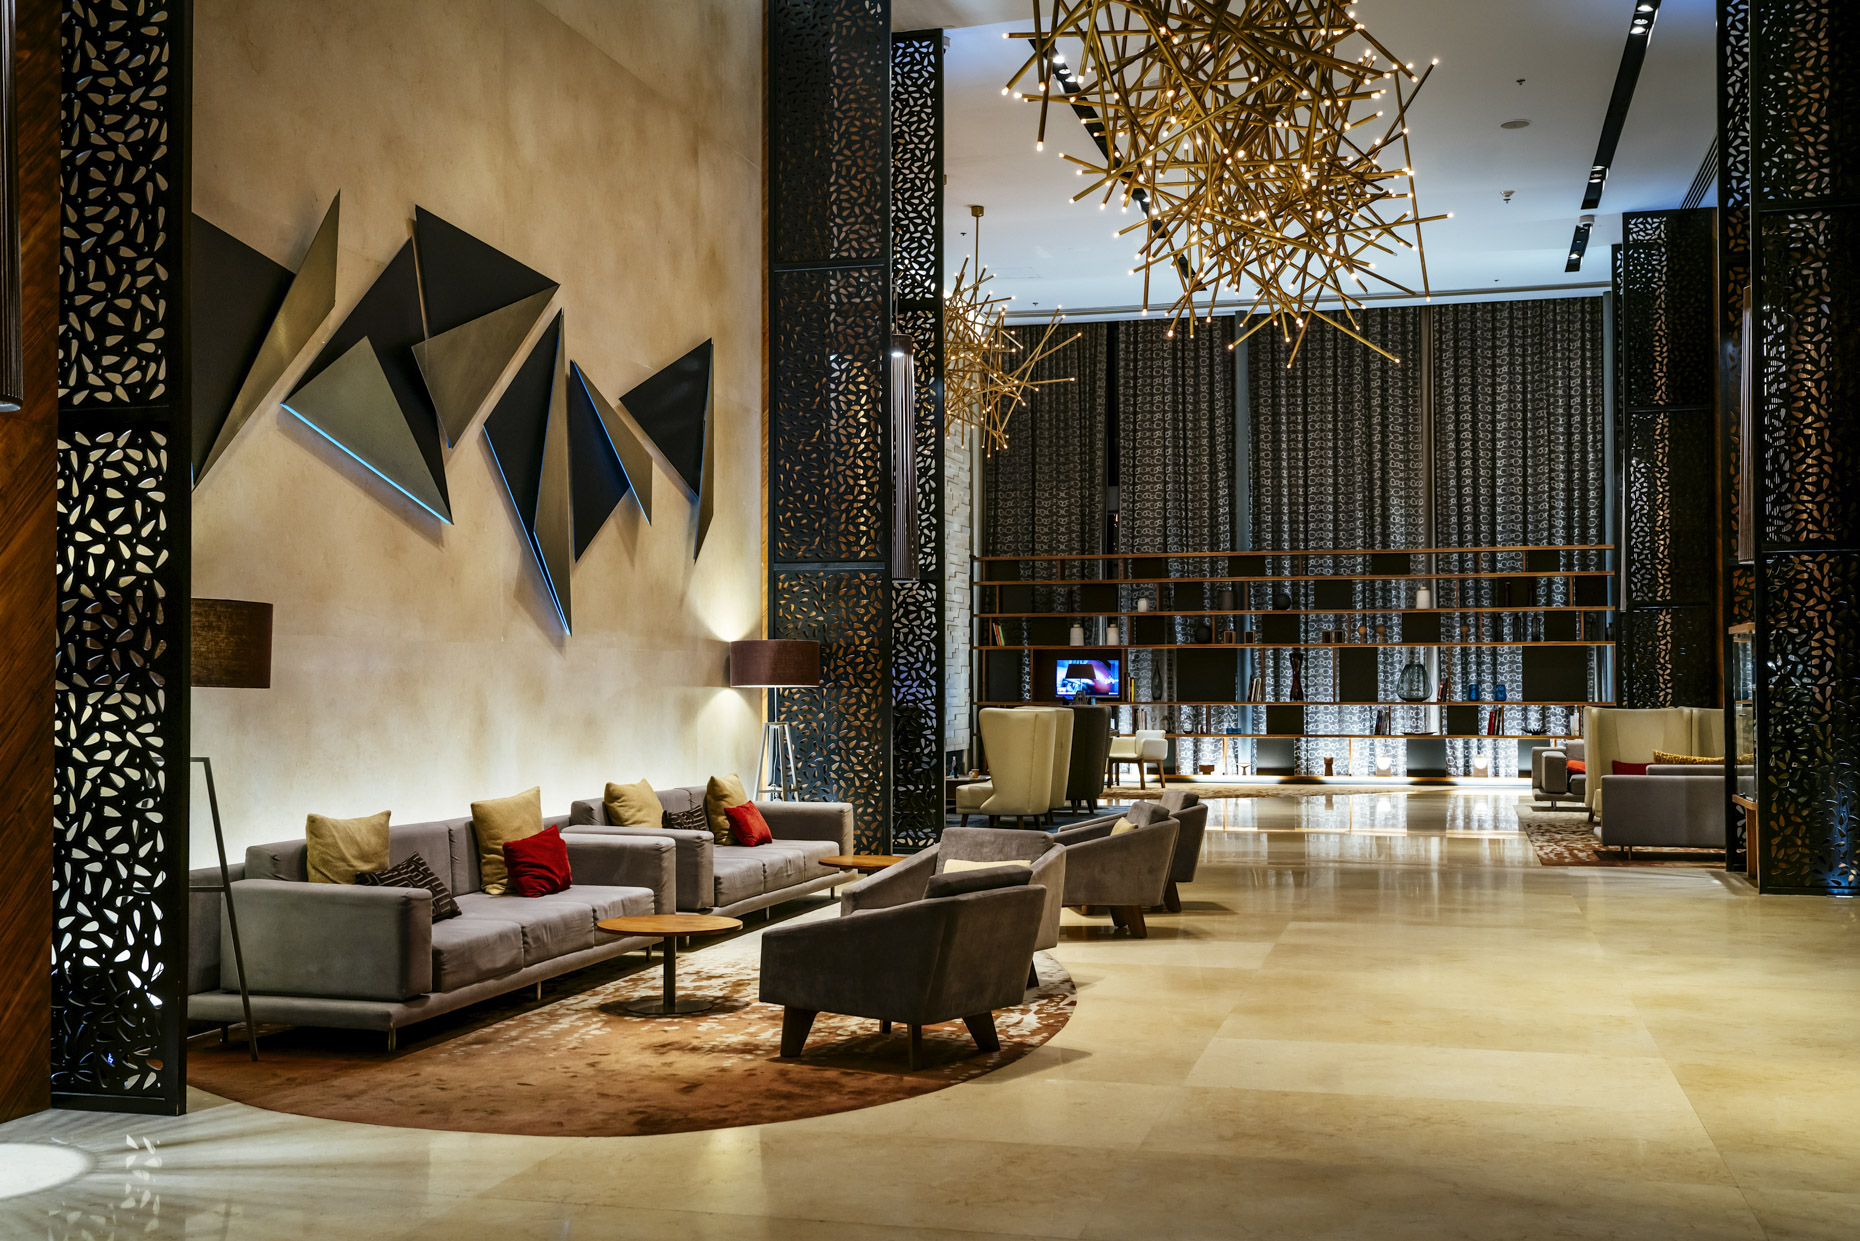 Hilton Mexico City lobby